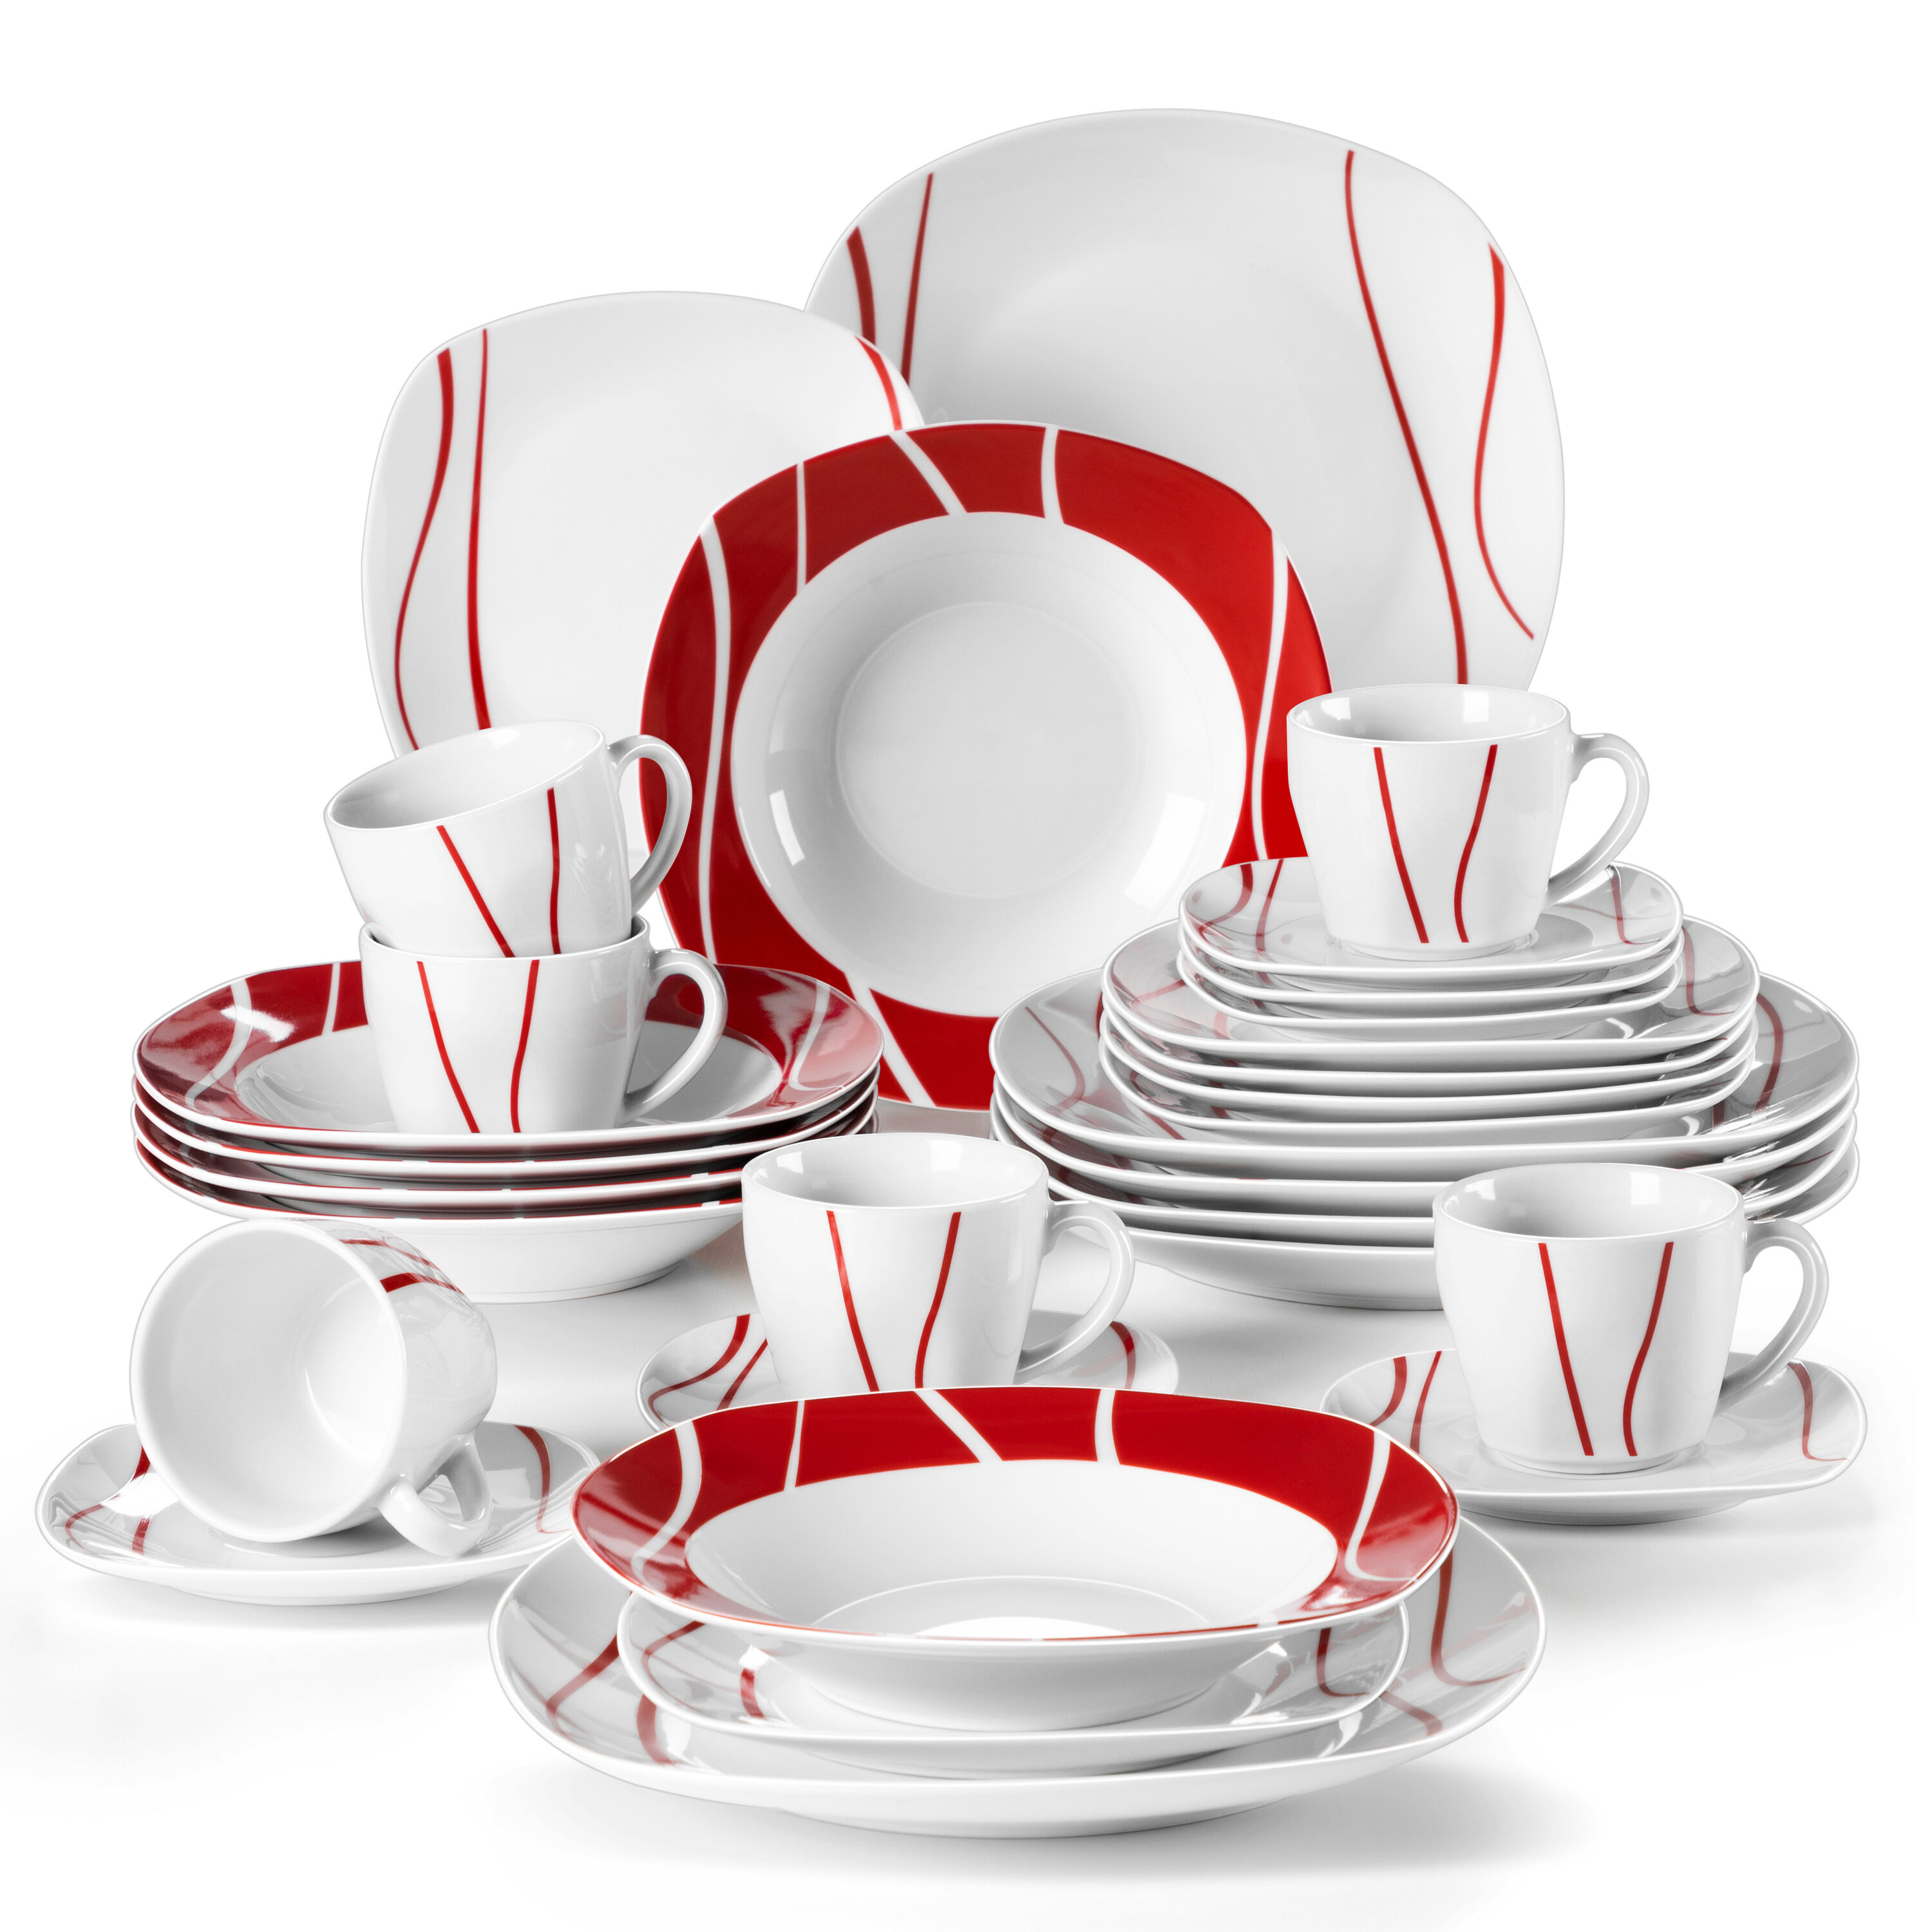 MALACASA Elisa Set of 20 Porcelain Dinnerware Set for 4 Person